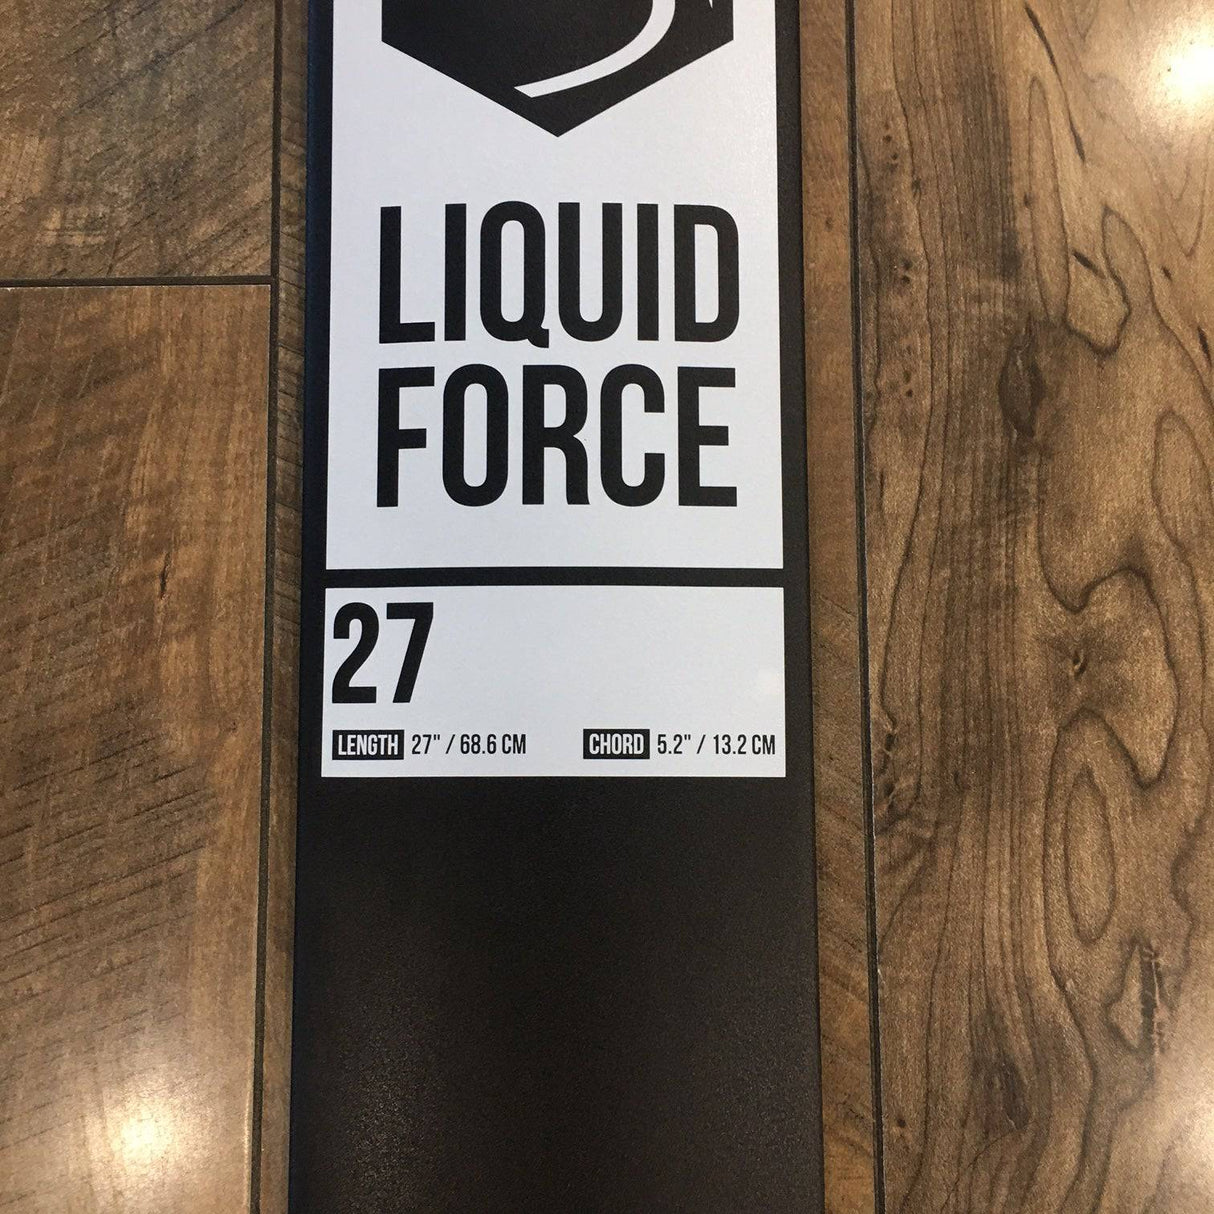 2020 Liquid Force Foil Mast Only